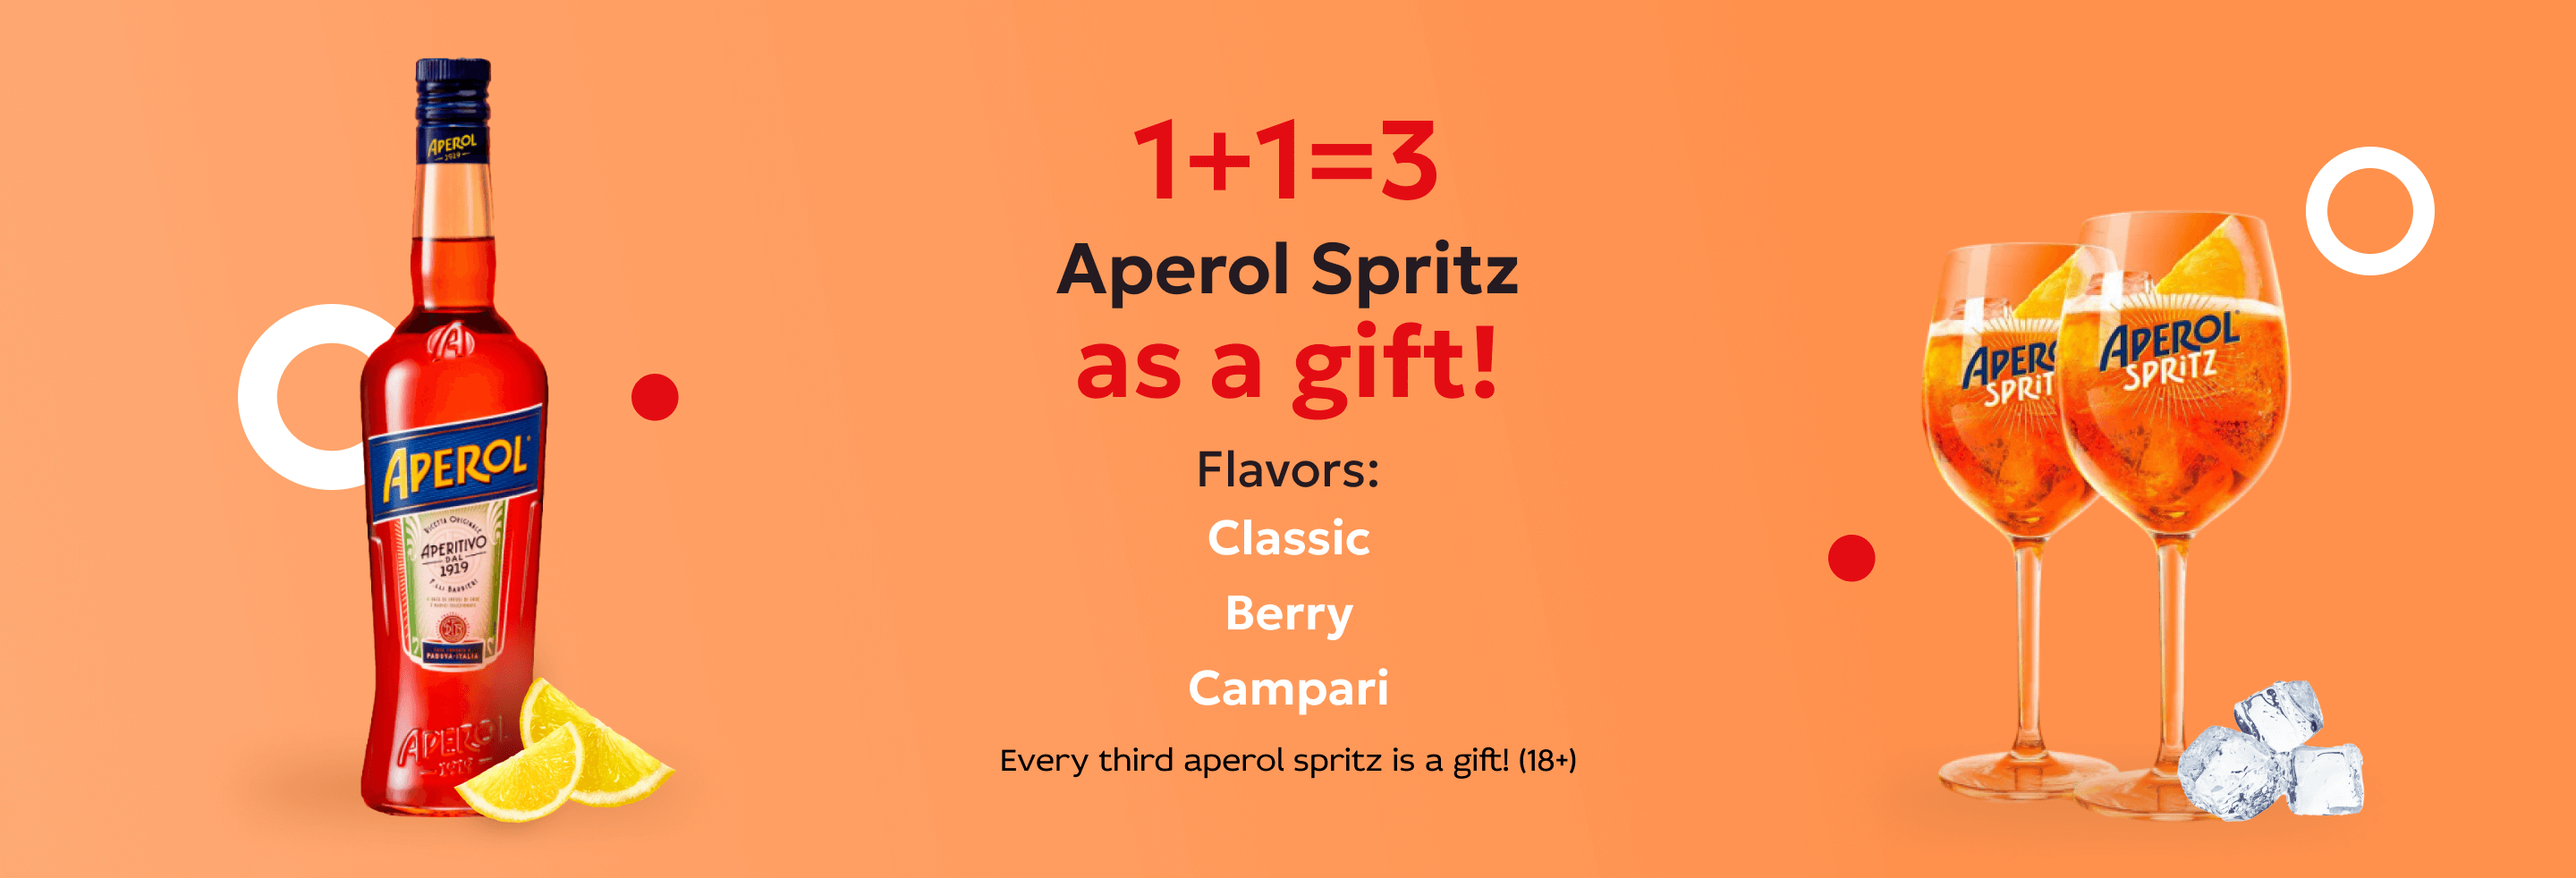 1+1=3 Aperol Spritz as a gift!